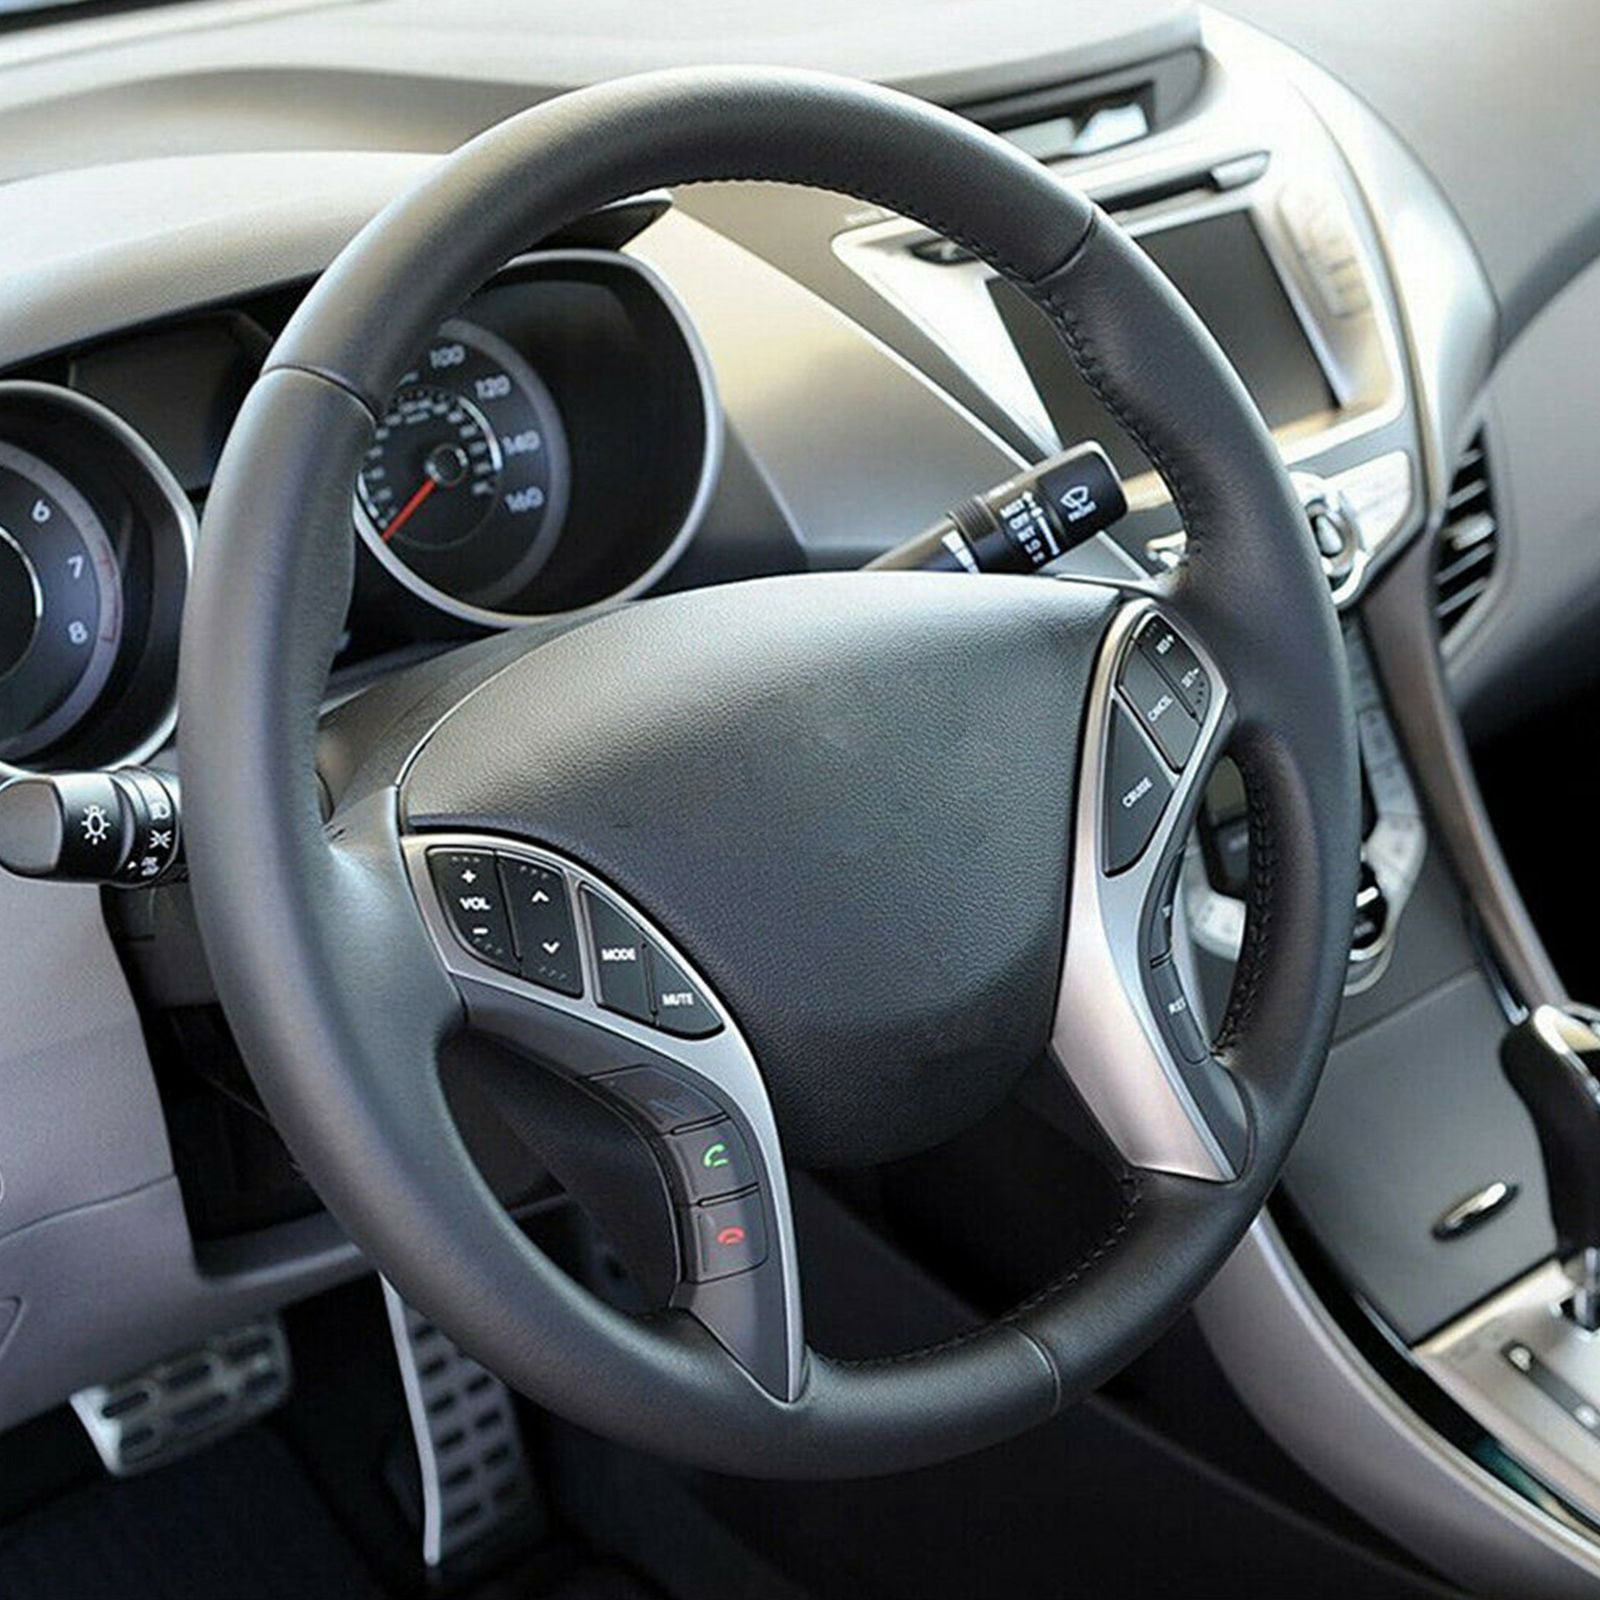 Genuine Leather Heated Steering Wheel Fits:Hyundai 2011-2013 Elantra Avante MD